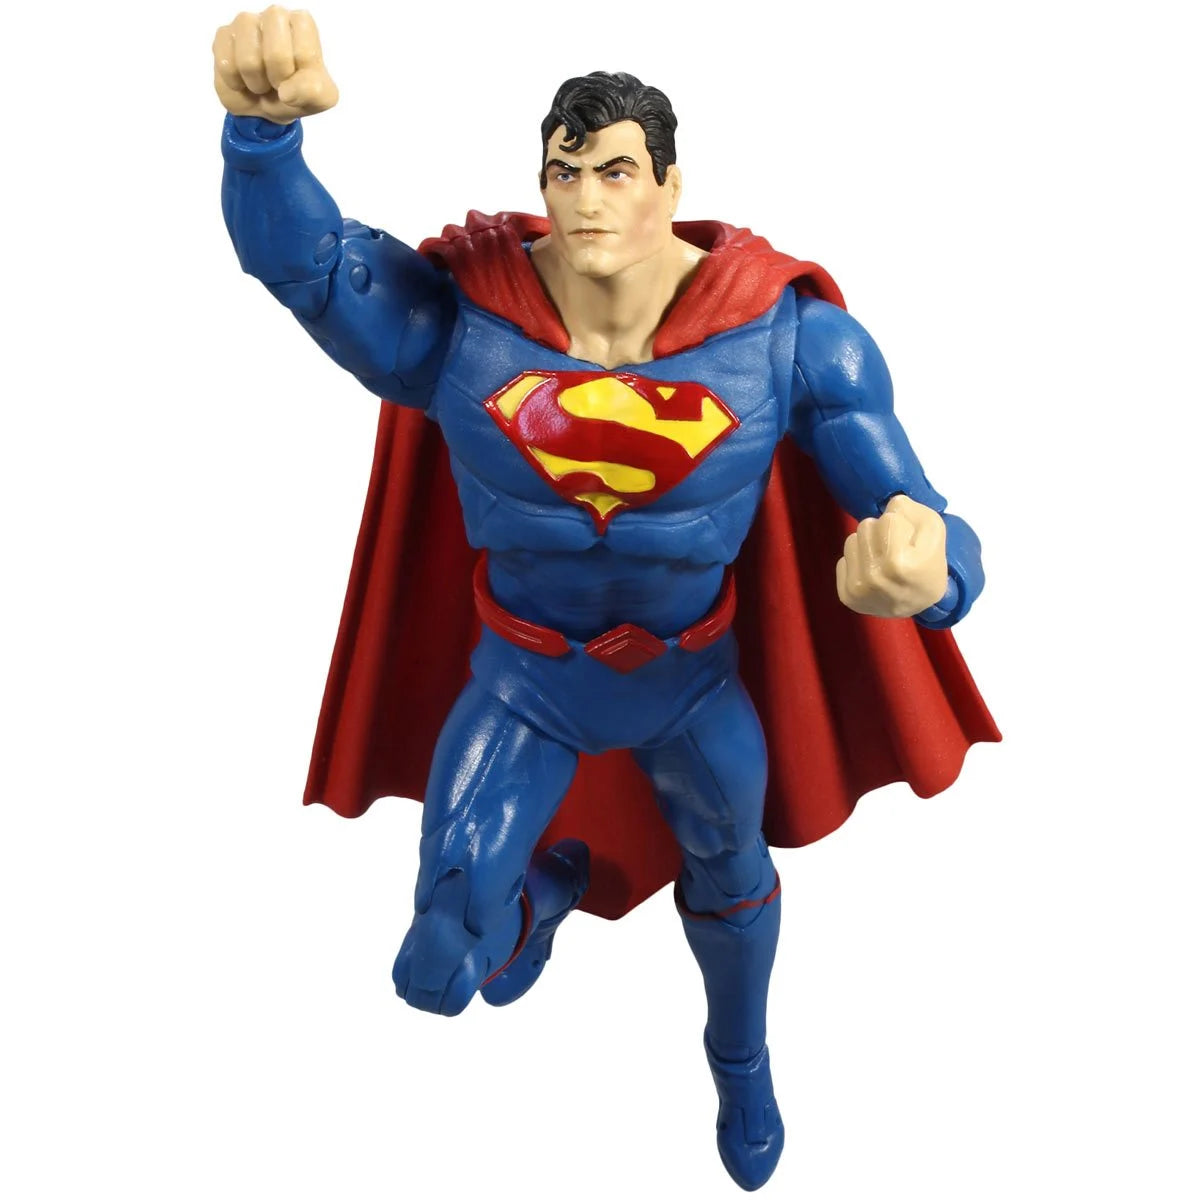 DC Multiverse Superman Rebirth Action Figure